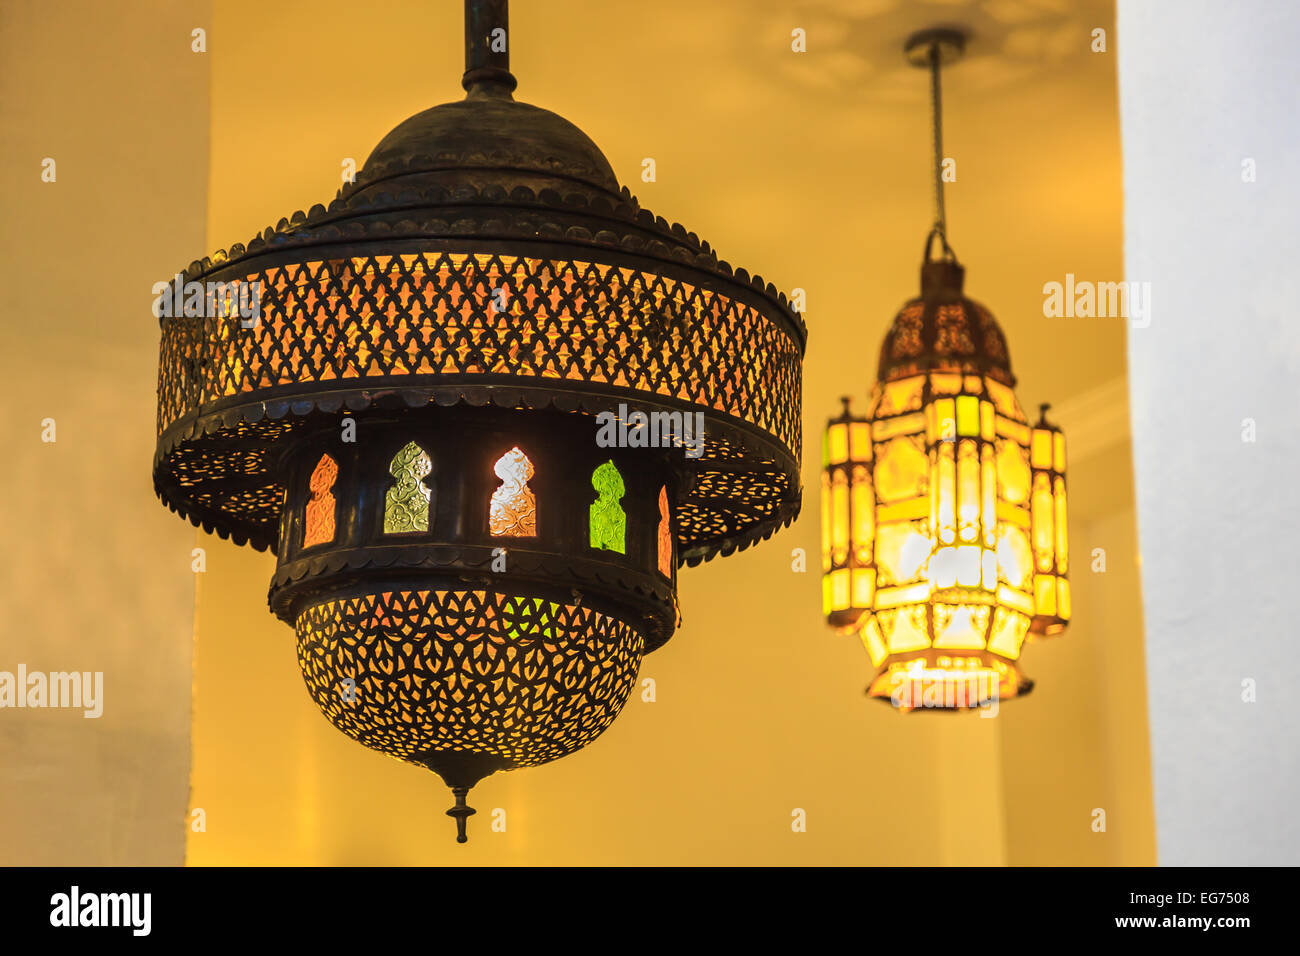 Ornate indoor Moroccan Style Lantern at Casablanca, Morocco Stock Photo